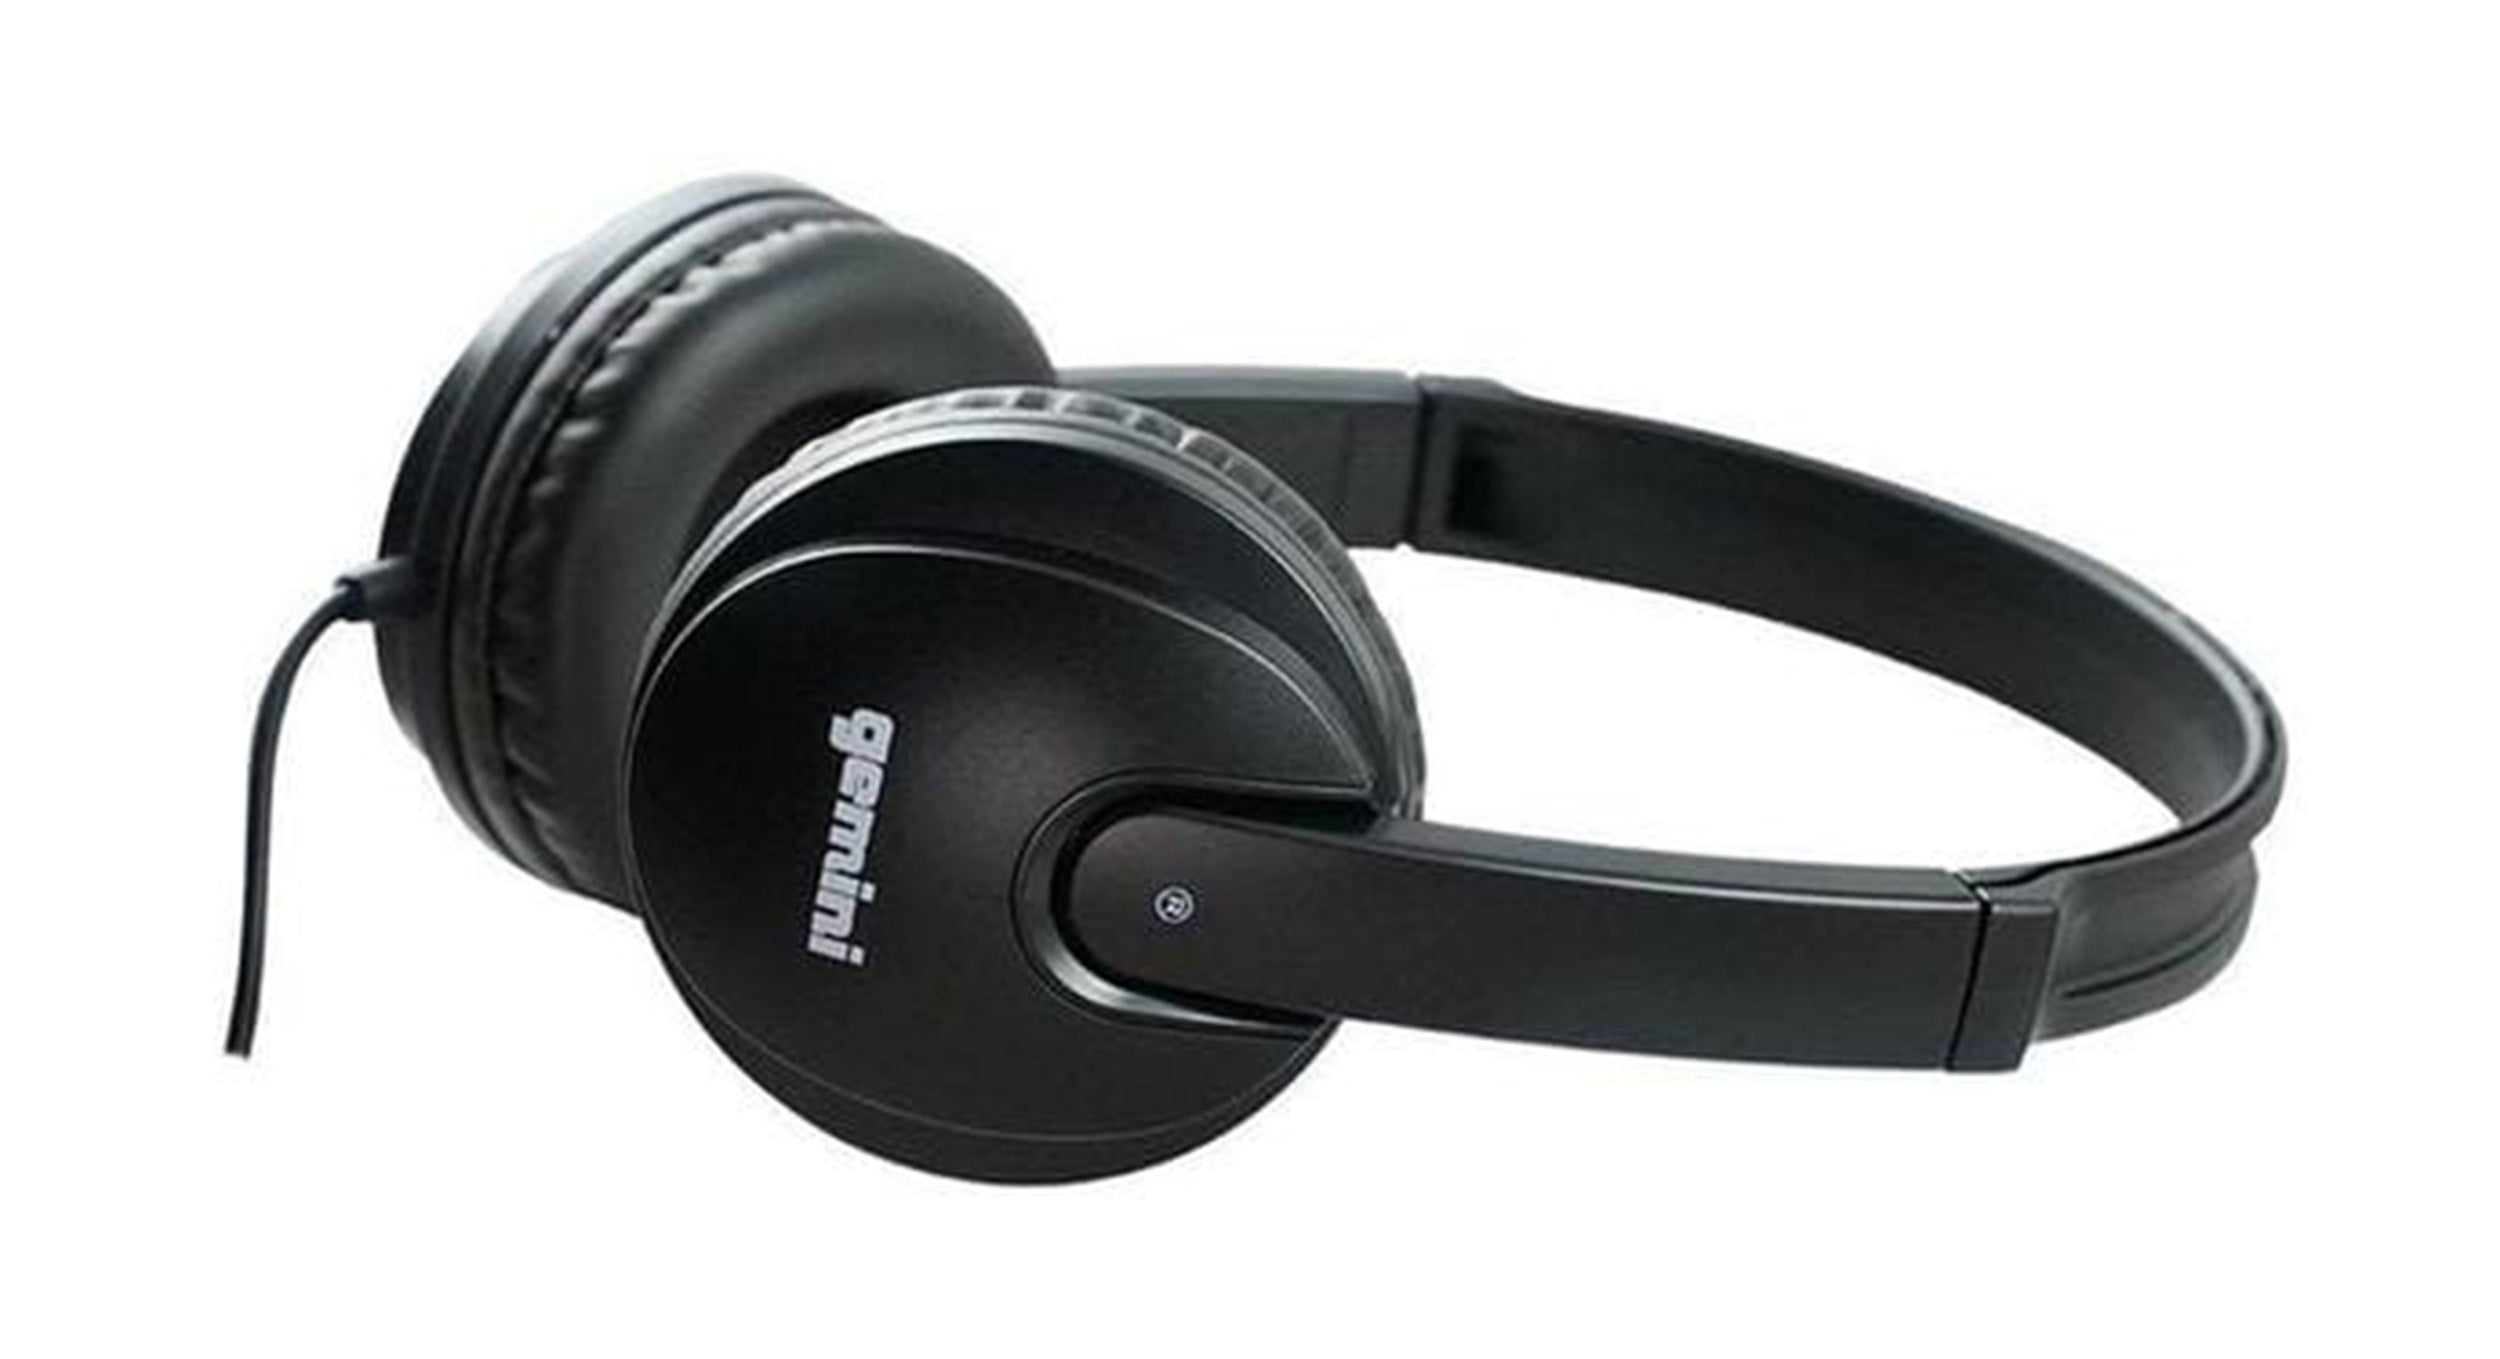 Gemini Sound DJX-200 (BLK) Professional DJ Headphones - Black - Hollywood DJ